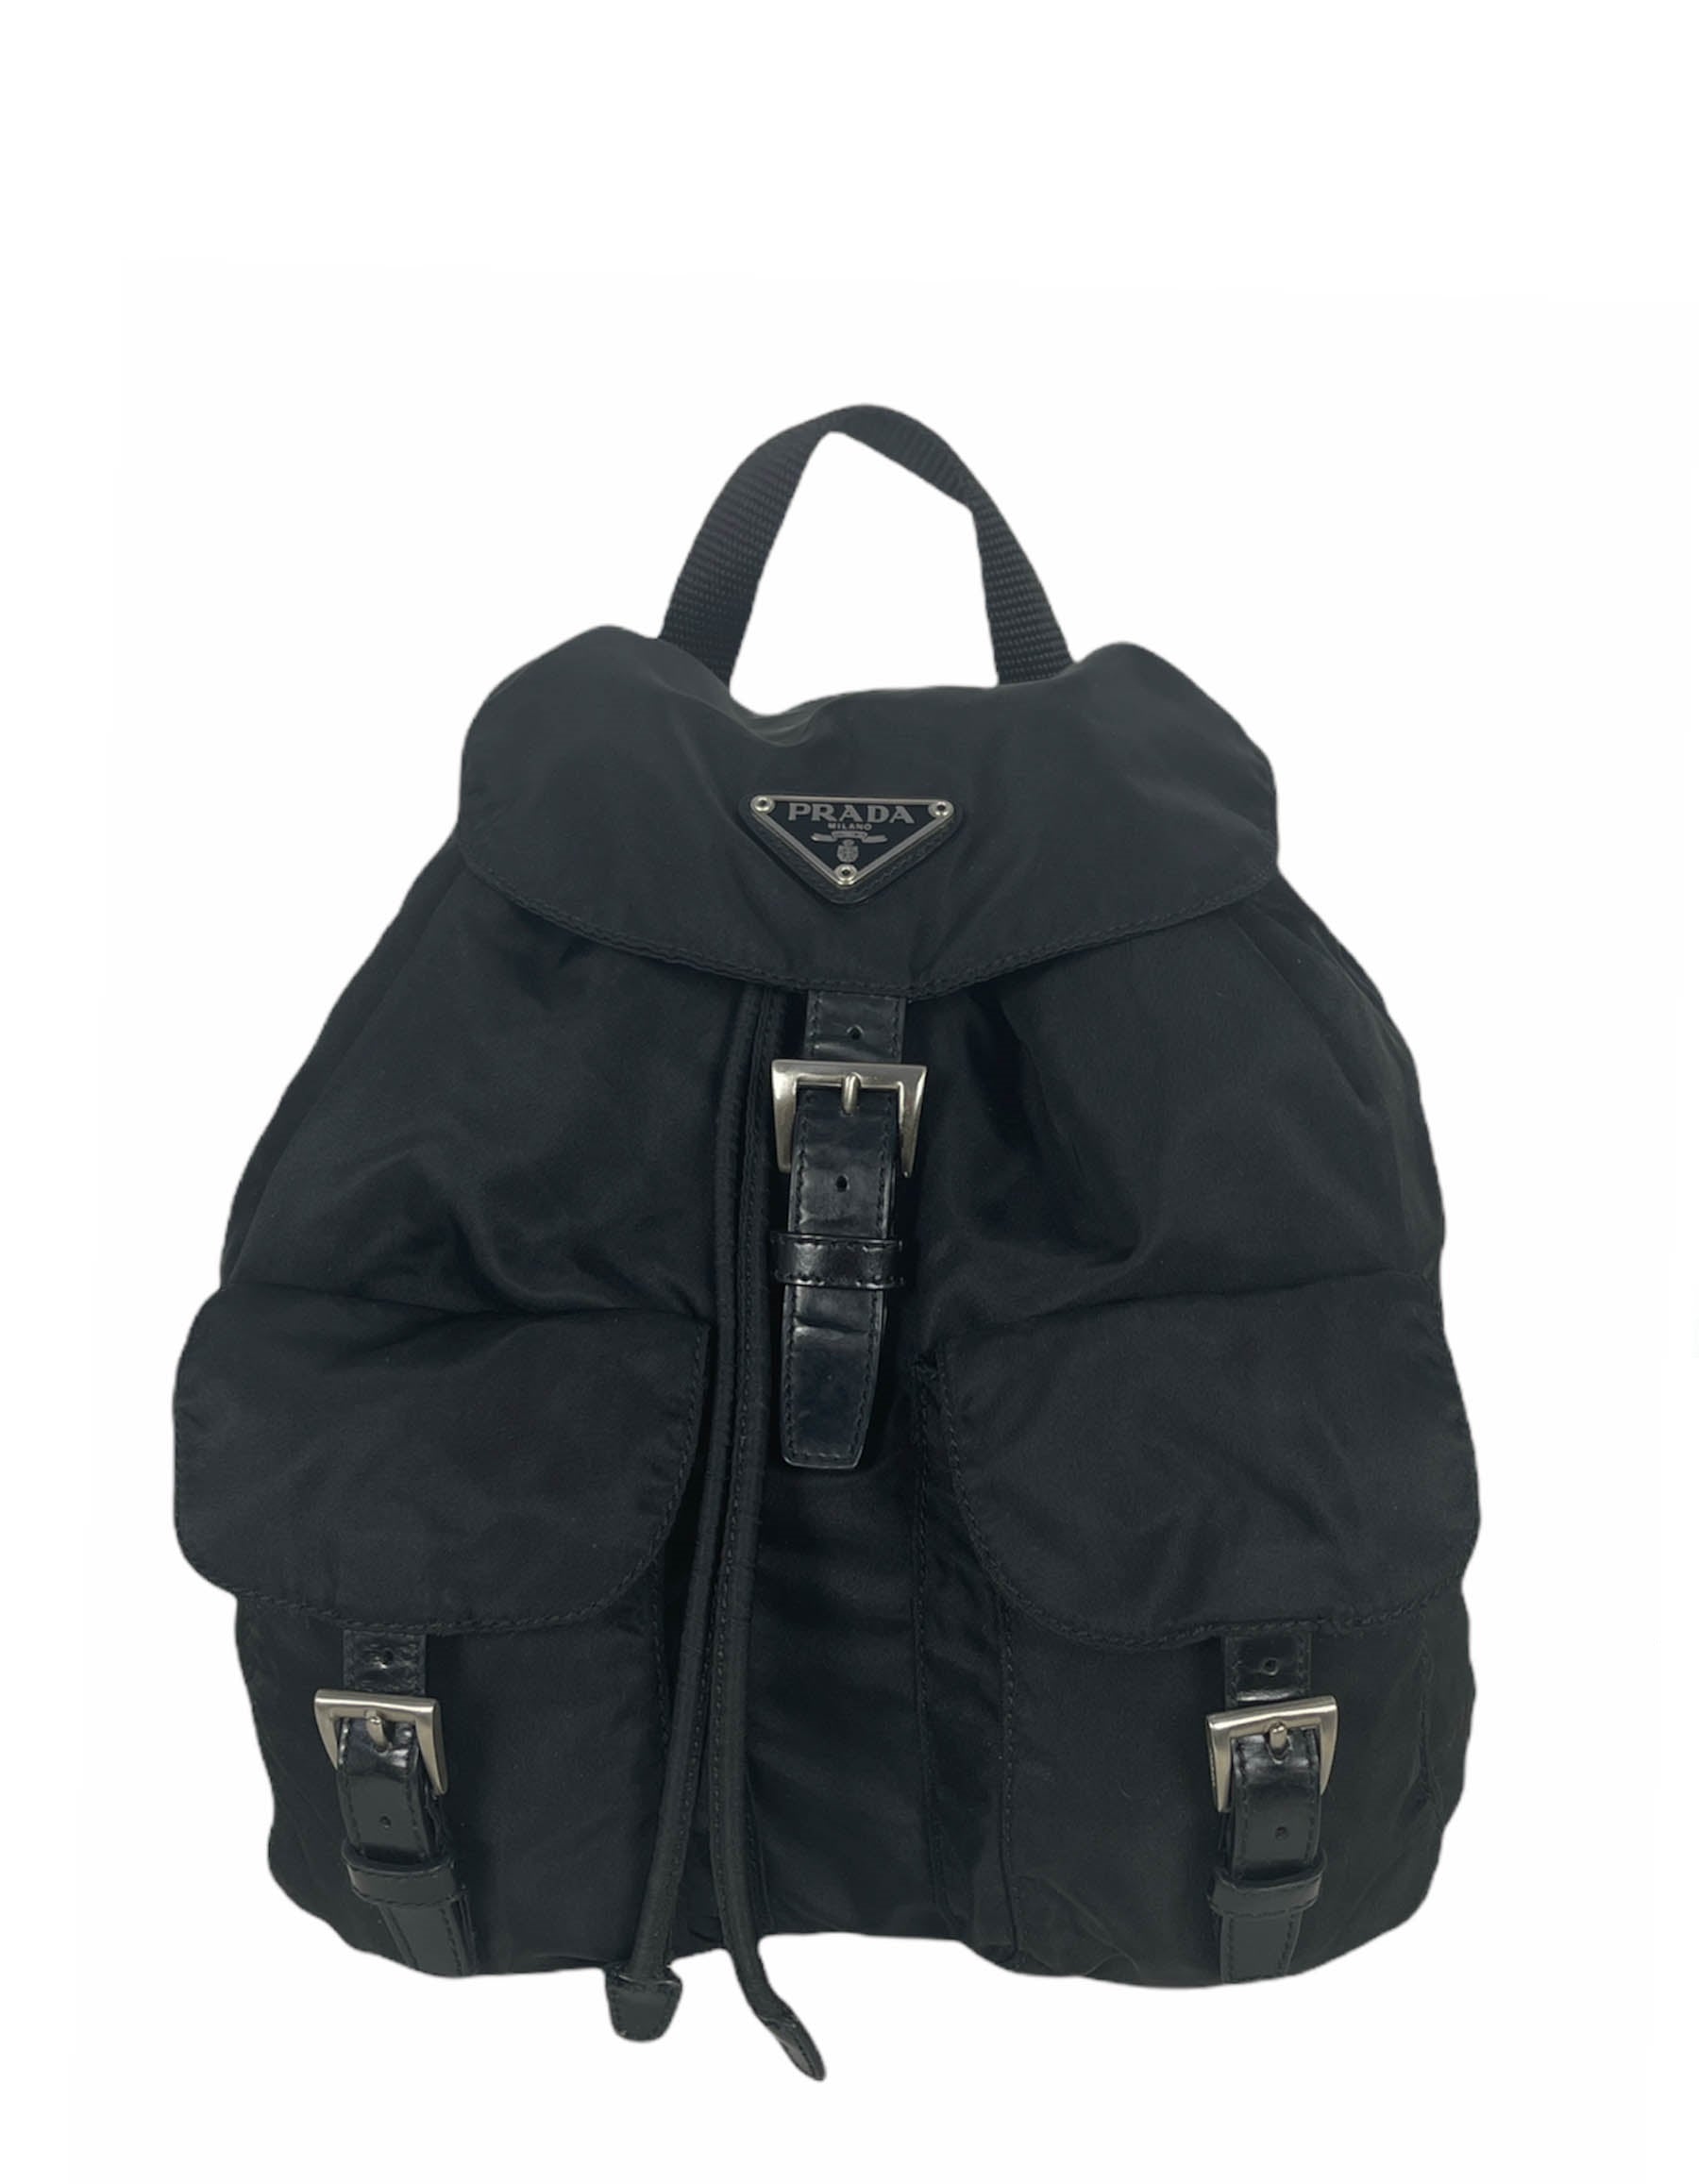 Prada Black Nylon Small Backpack Bag w/ Front Buckle Pockets